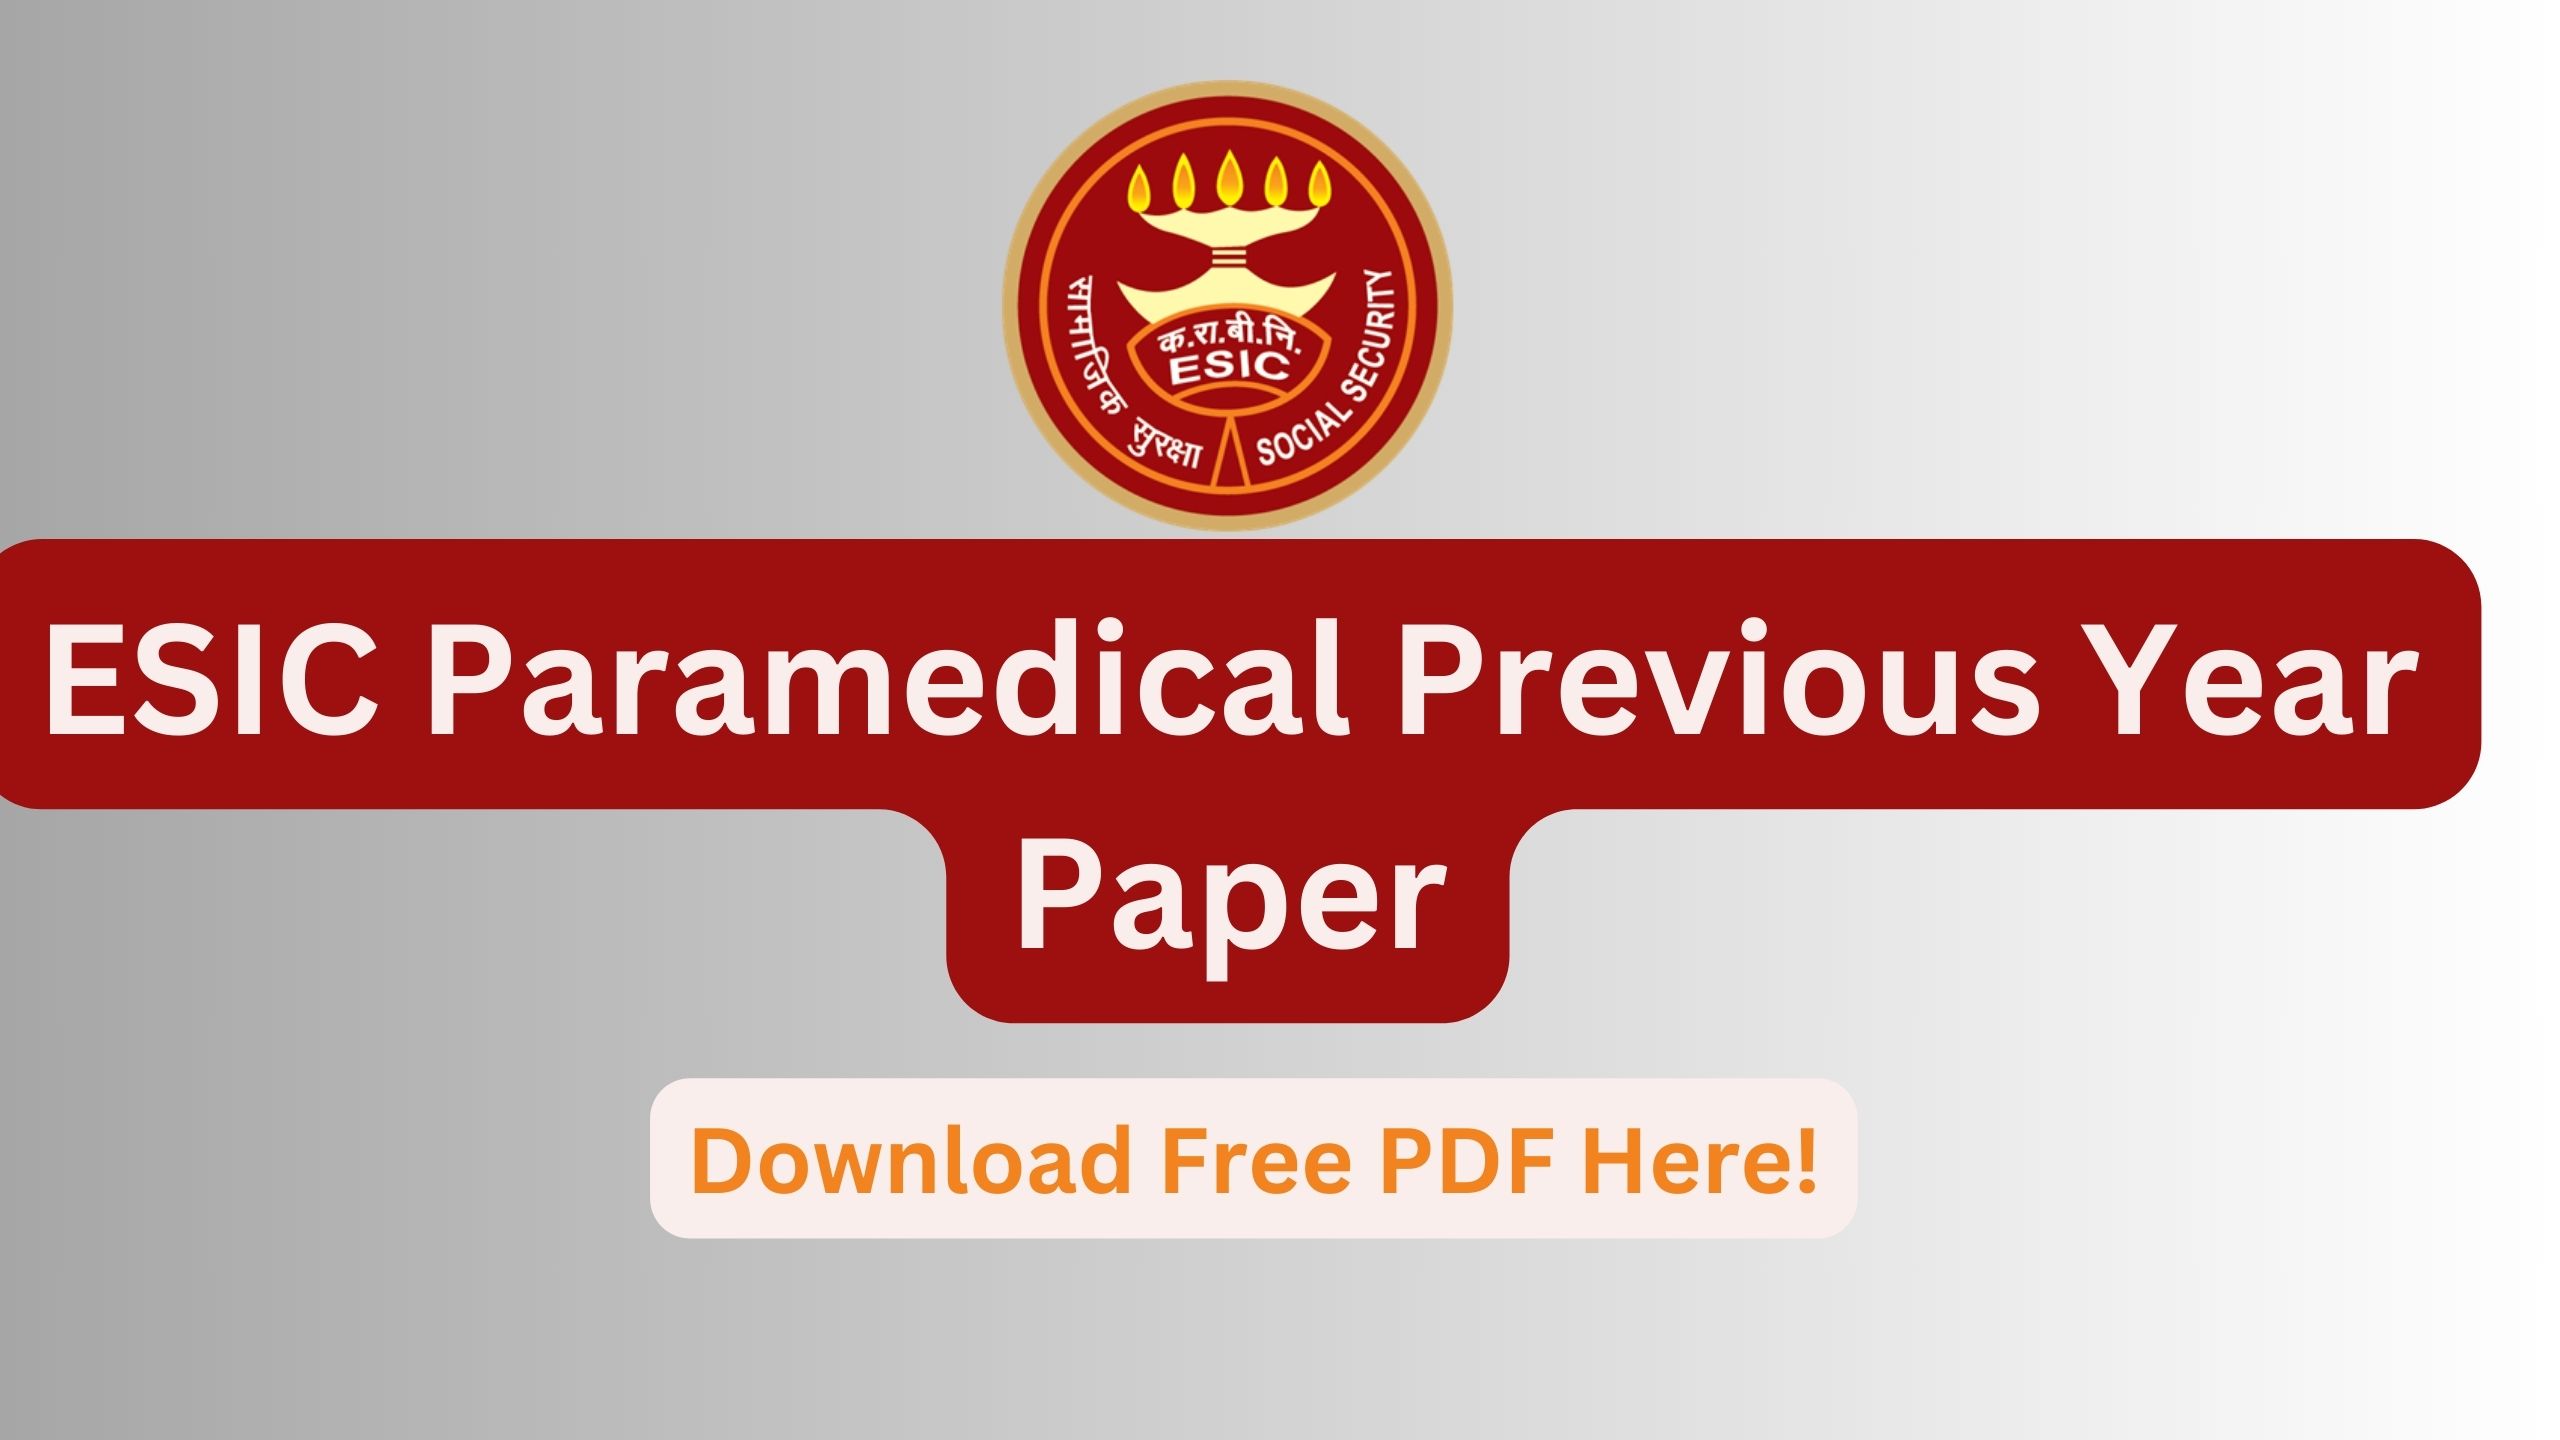 ESIC Paramedical Previous Year Paper